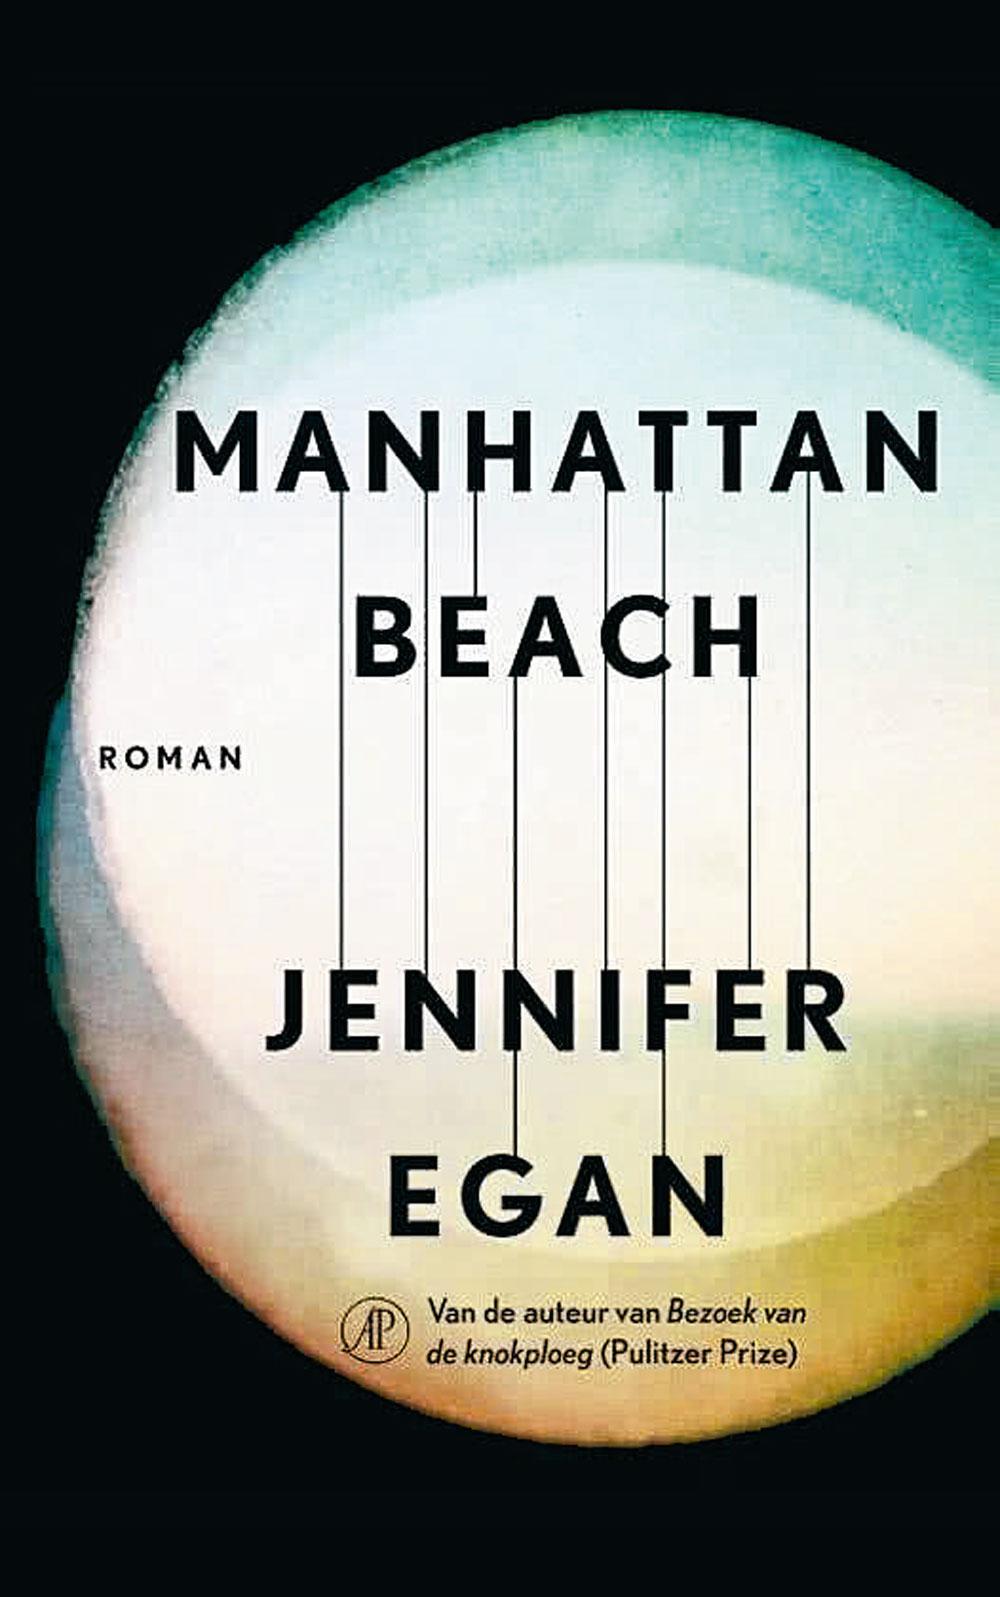 Jennifer Egan, Manhattan Beach, De Arbeiderspers, 464 blz., 22,50 euro